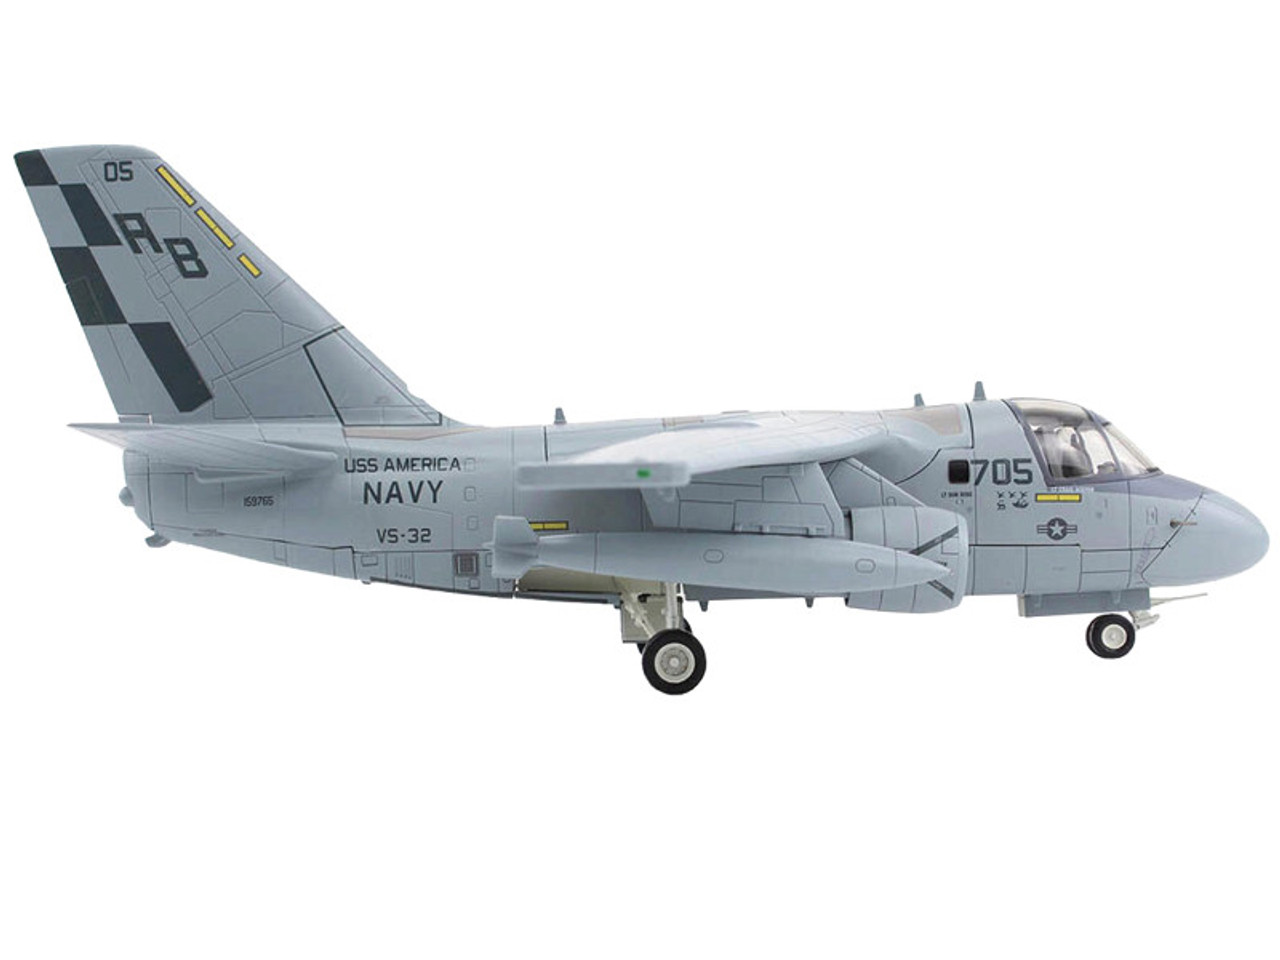 Lockheed S-3B Viking Aircraft "Desert Storm VS-32 Maulers USS America" United States Navy "Air Power Series" 1/72 Diecast Model by Hobby Master